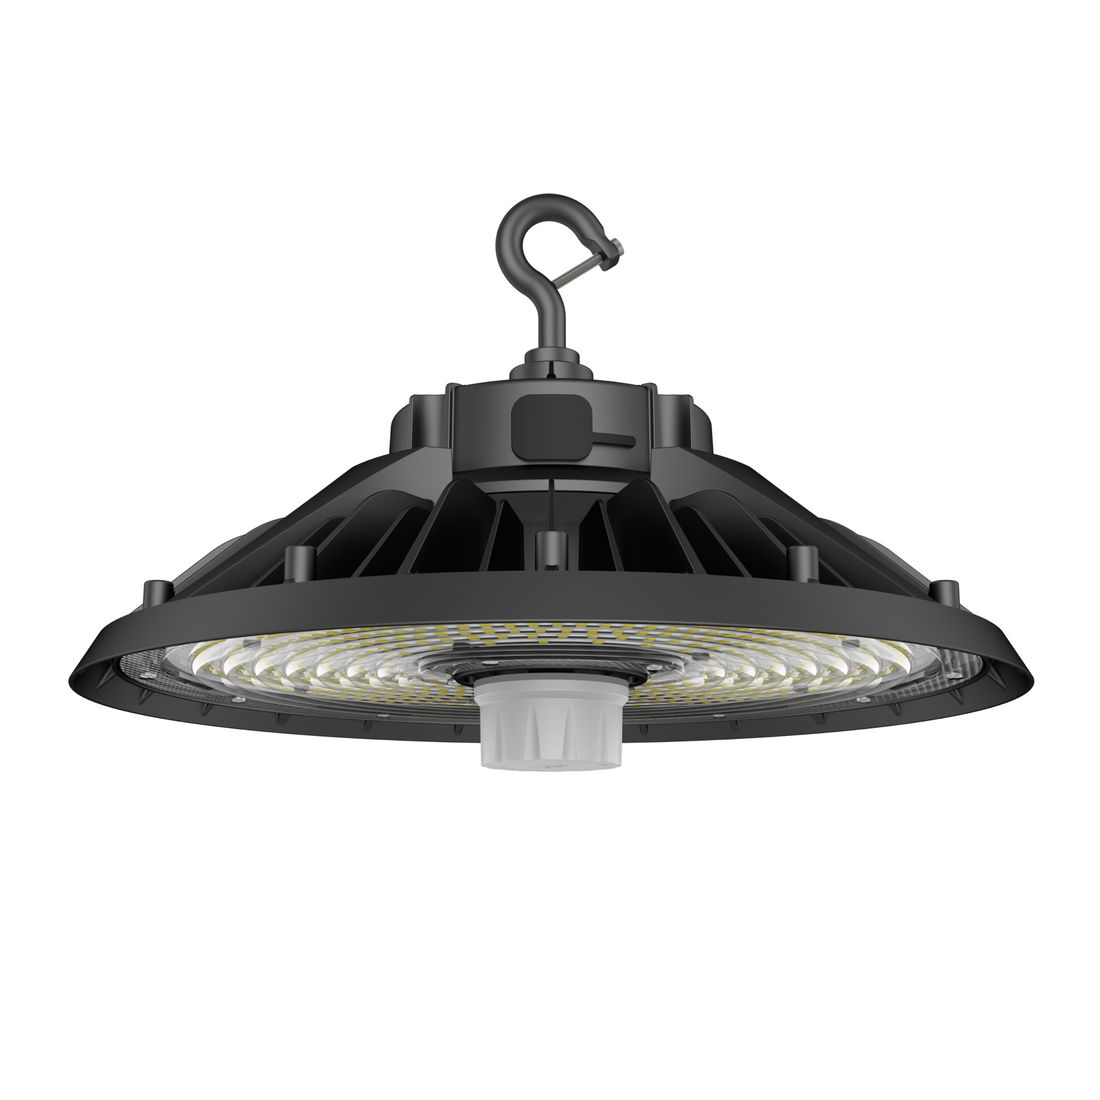 LED UFO High Bay Light 180W/200W/240W Wattage Adjustable - 5000K - 36240Lumens 0-10V Dimmable, With sensor base,120-277VAC DLC 5.1 Premium, Black